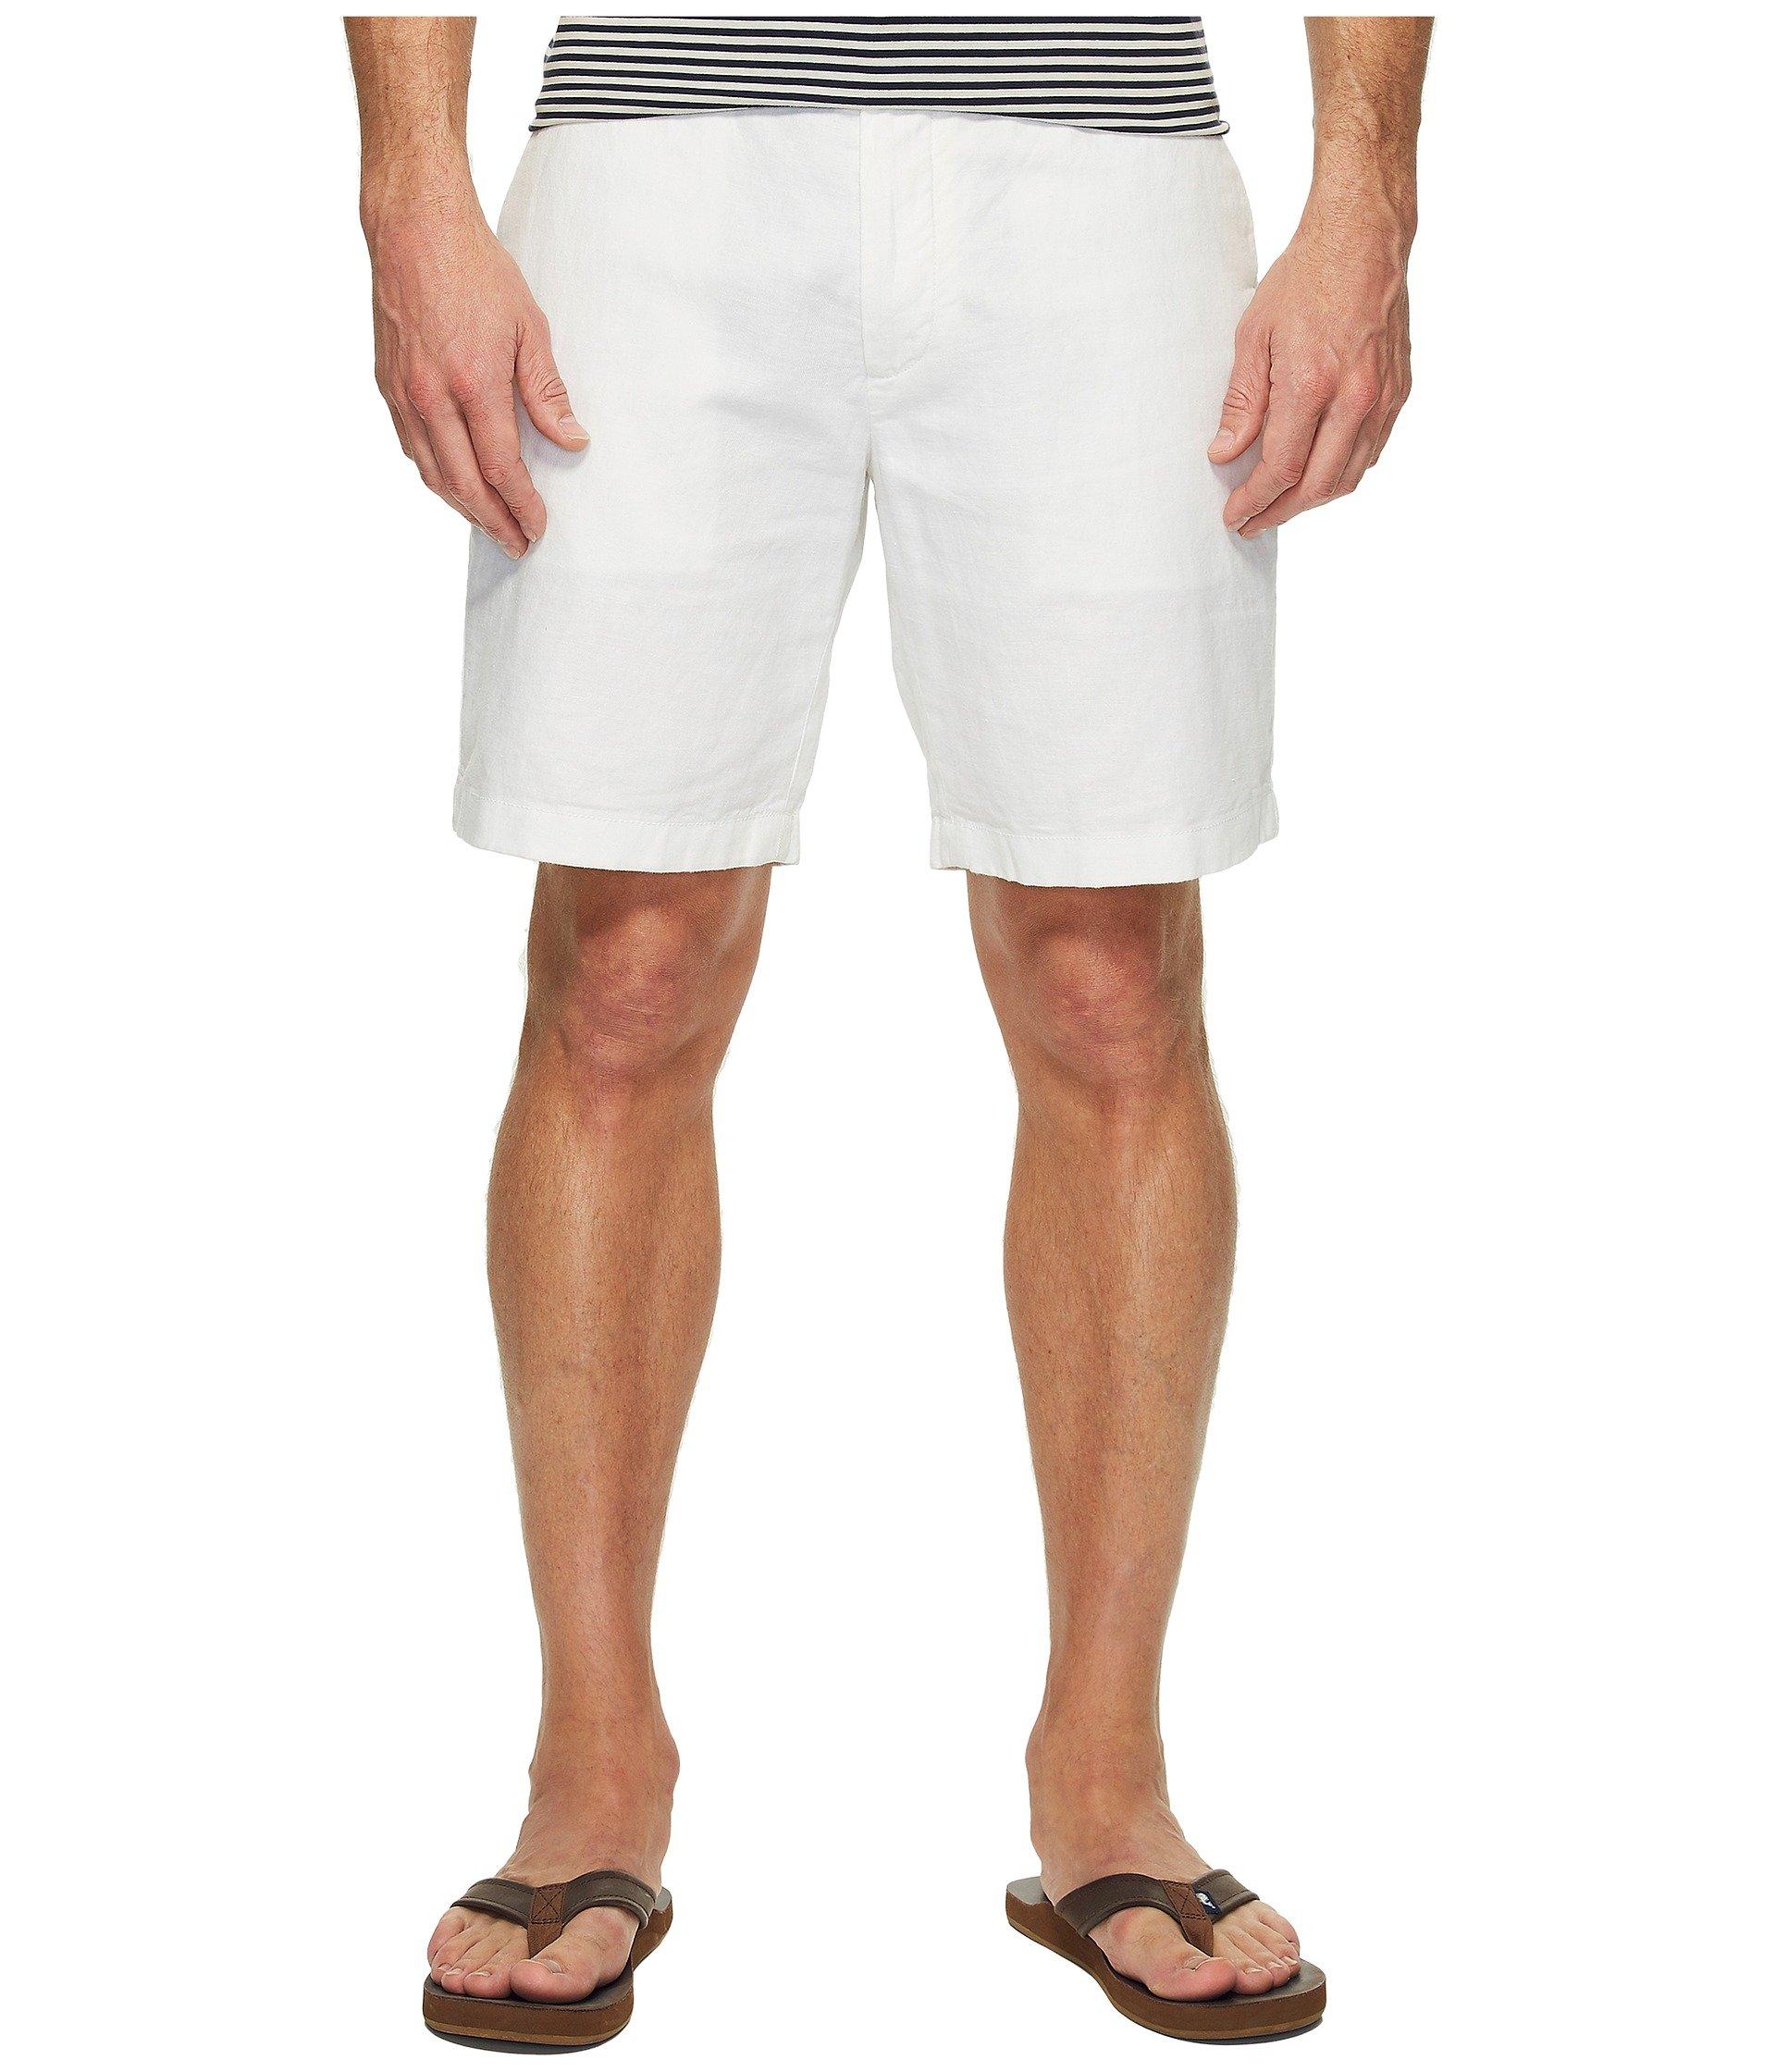 Nautica Linen Cotton Shorts in Bright White (White) for Men - Save 3% ...